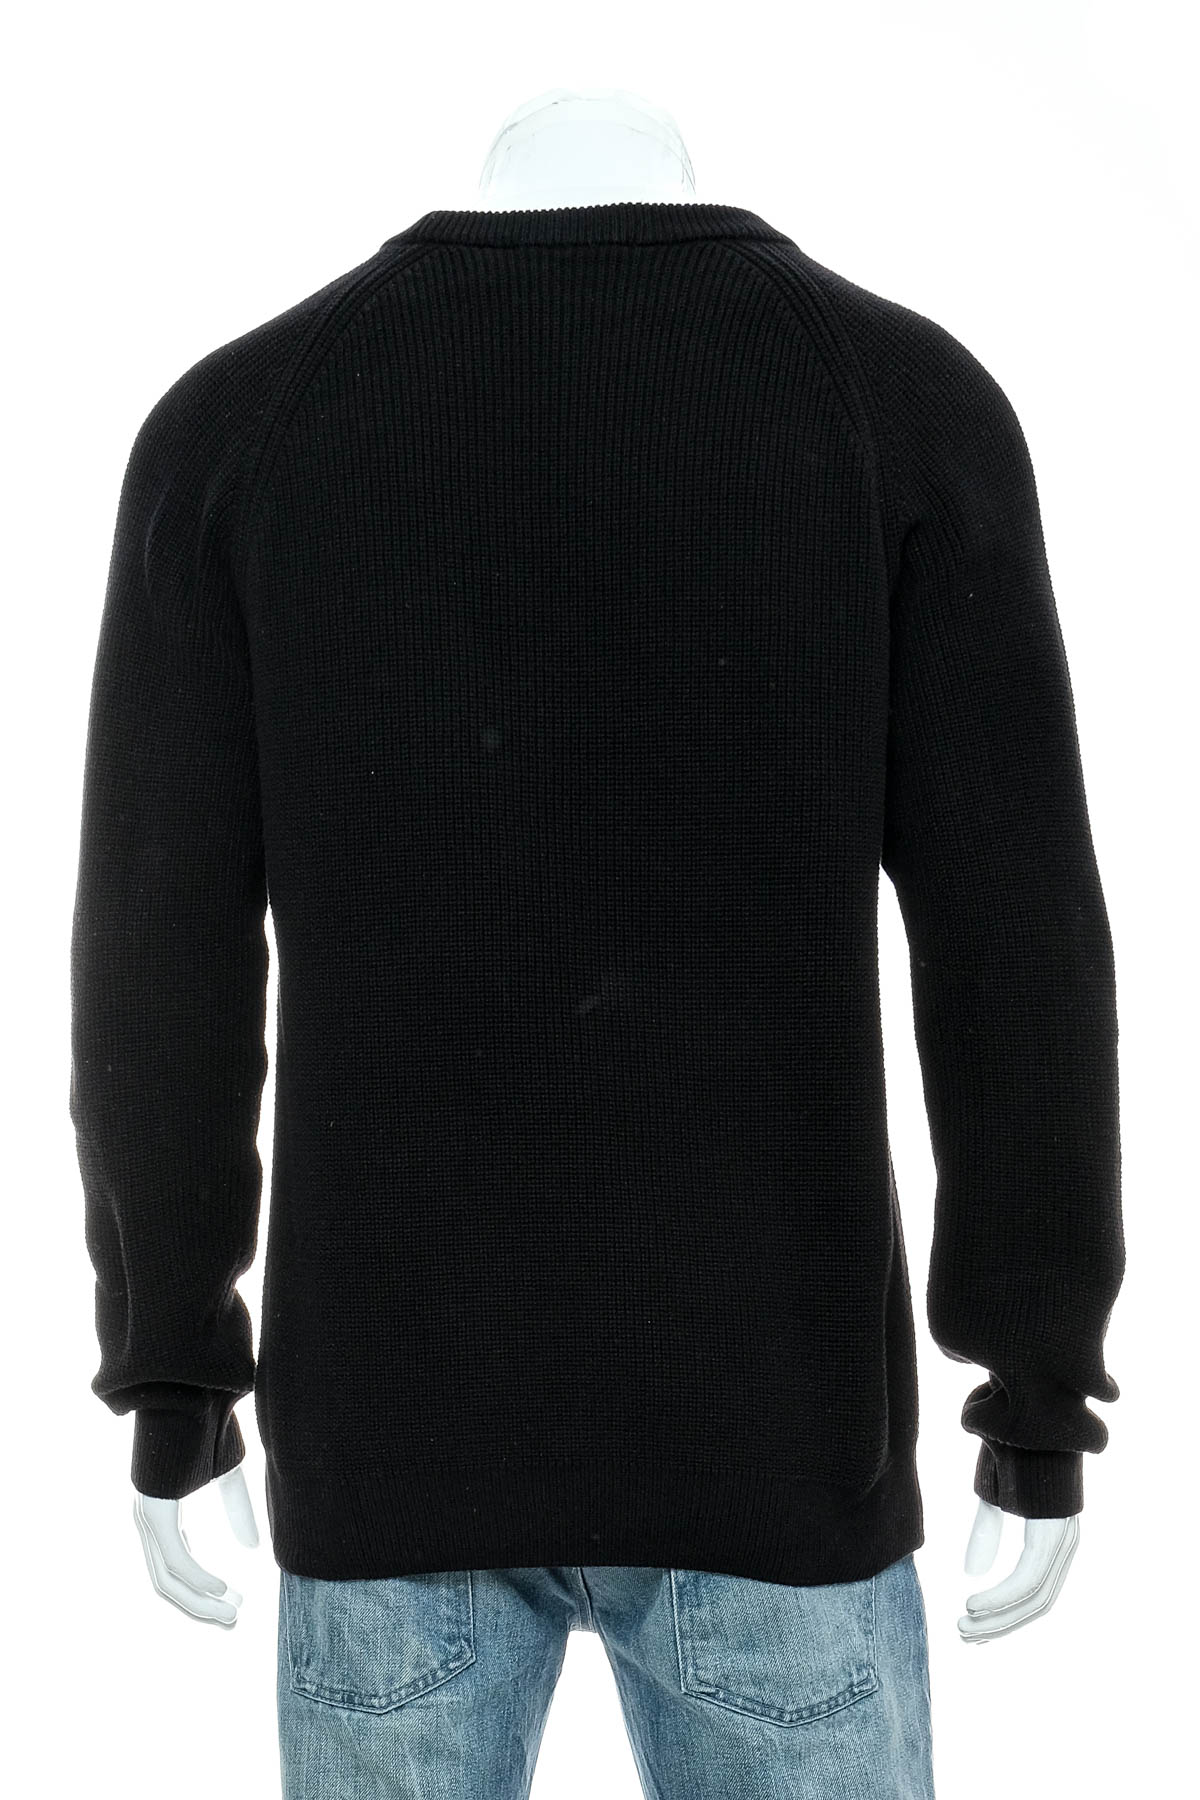 Men's sweater - Nu-in - 1